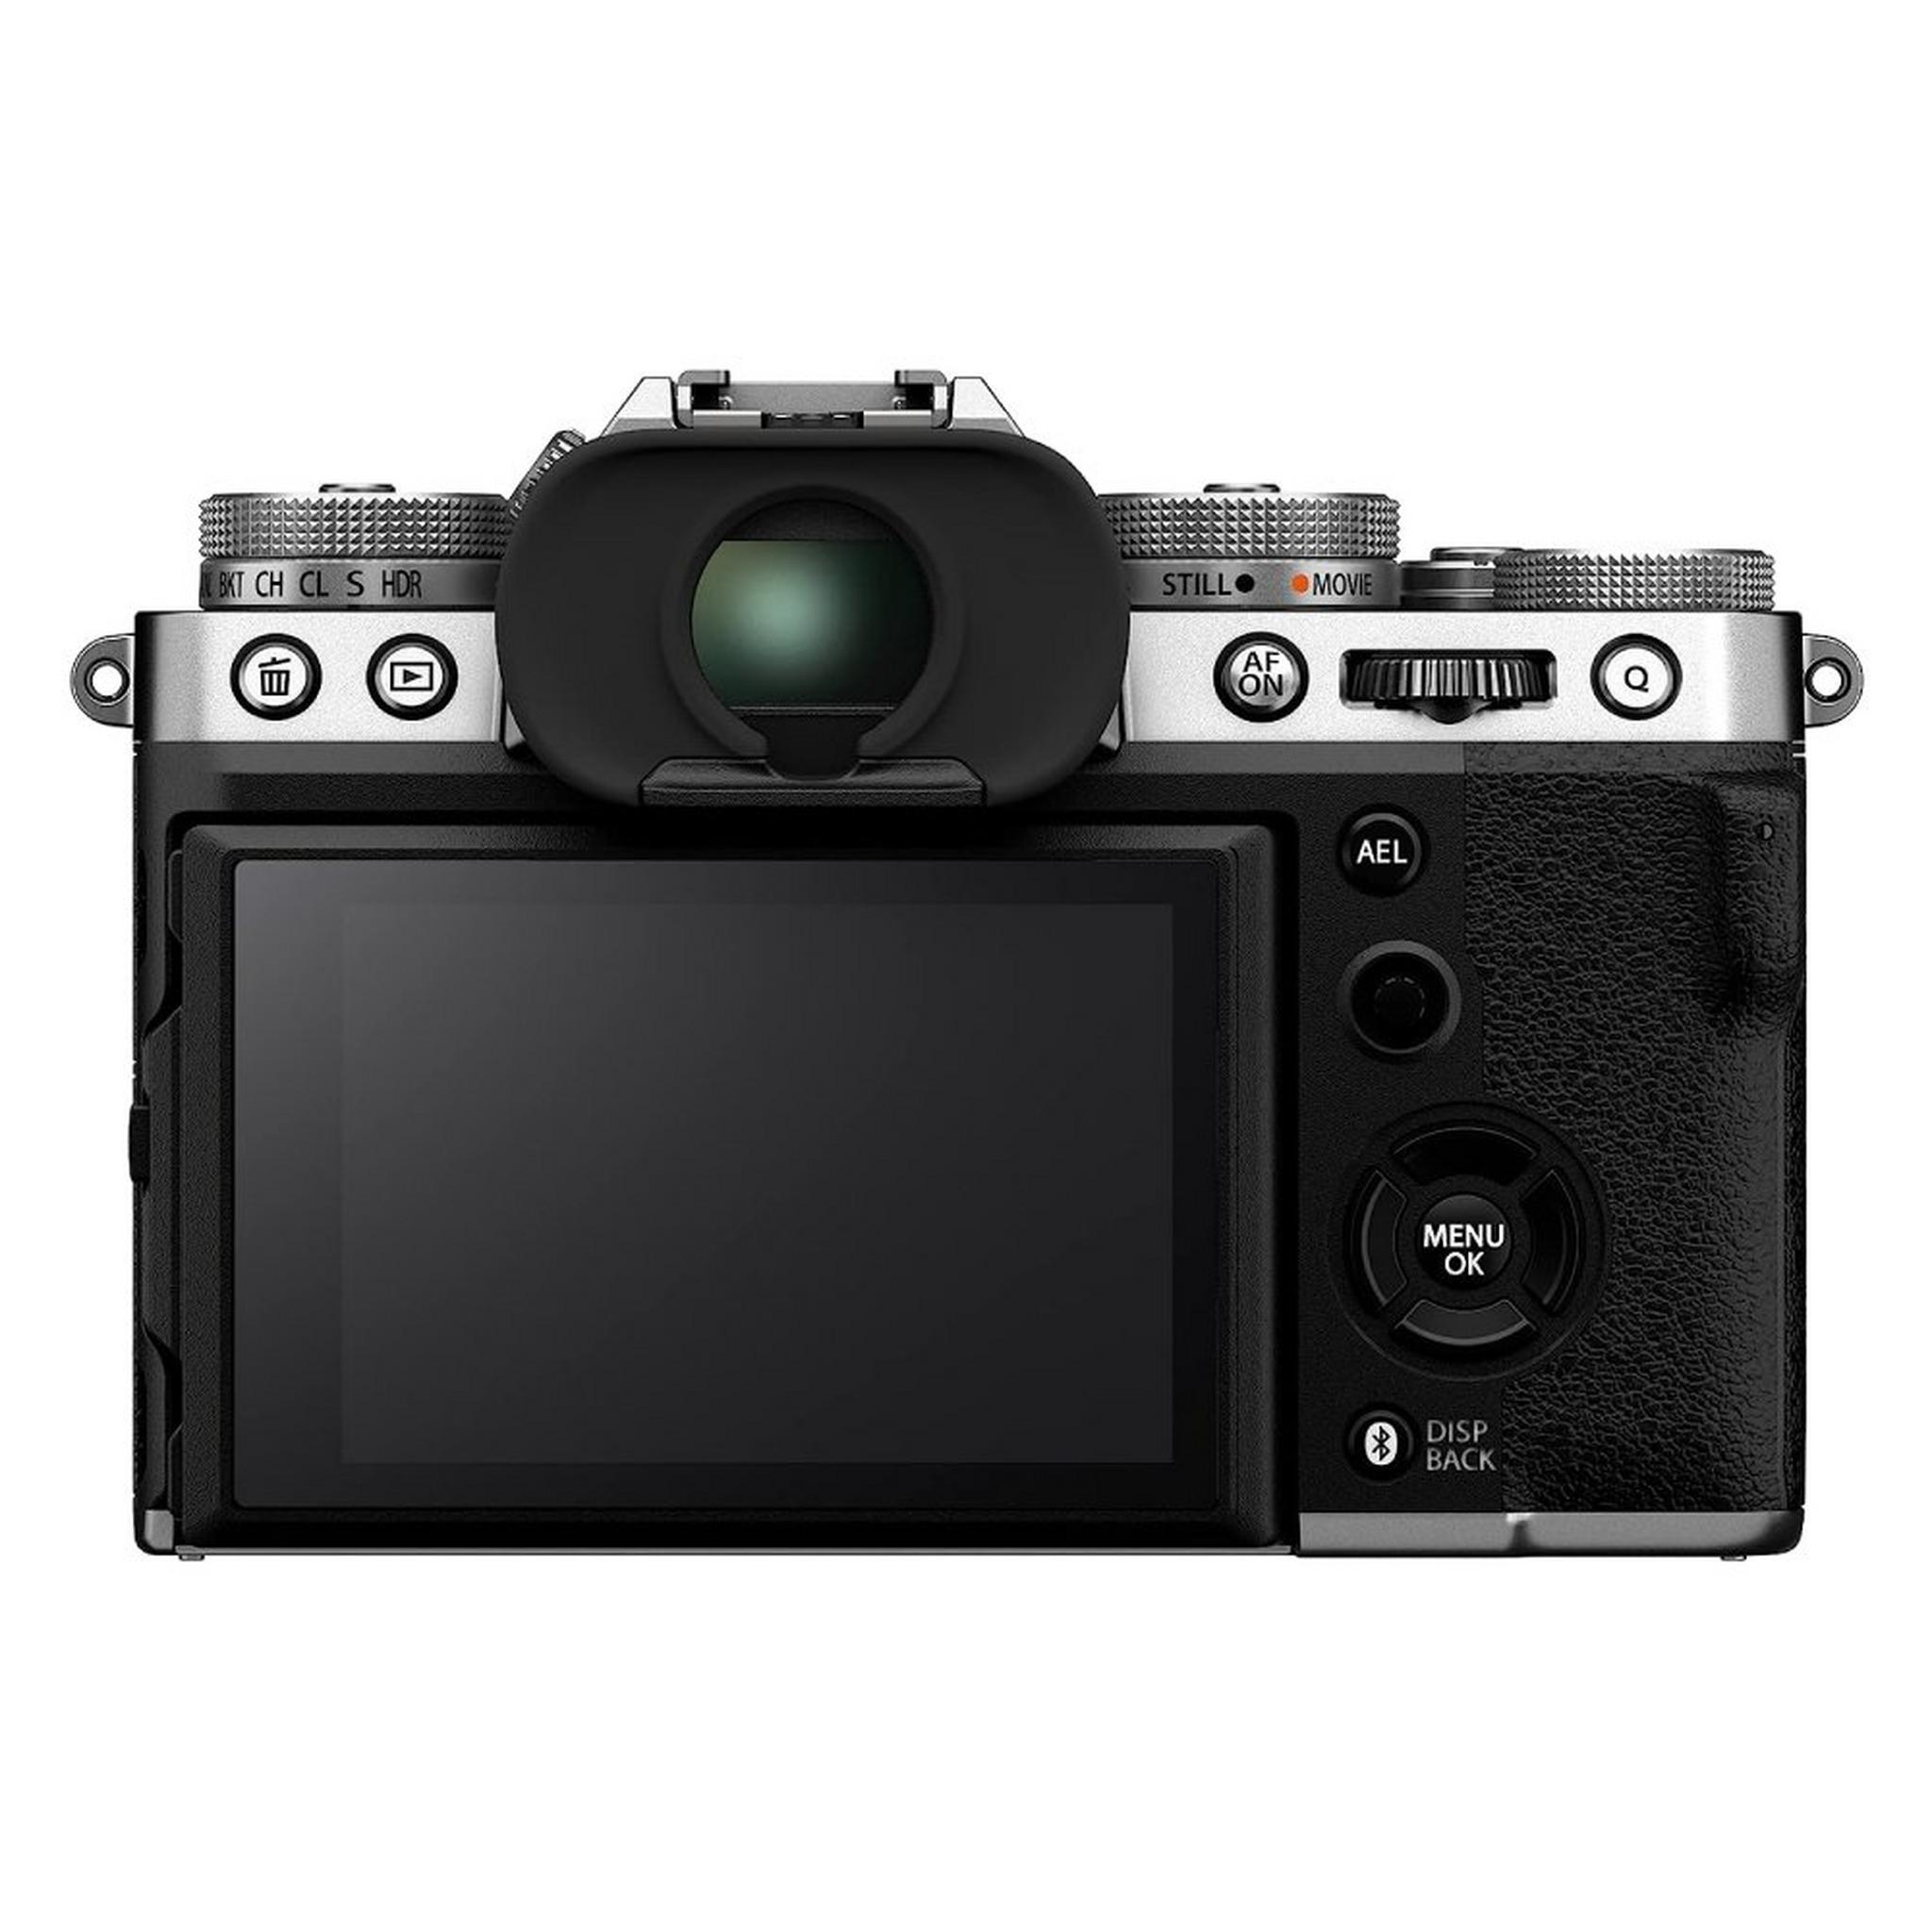 Fujifilm Mirrorless Digital Camera + XF18-55mm Lens Kit, X-T5 – Silver